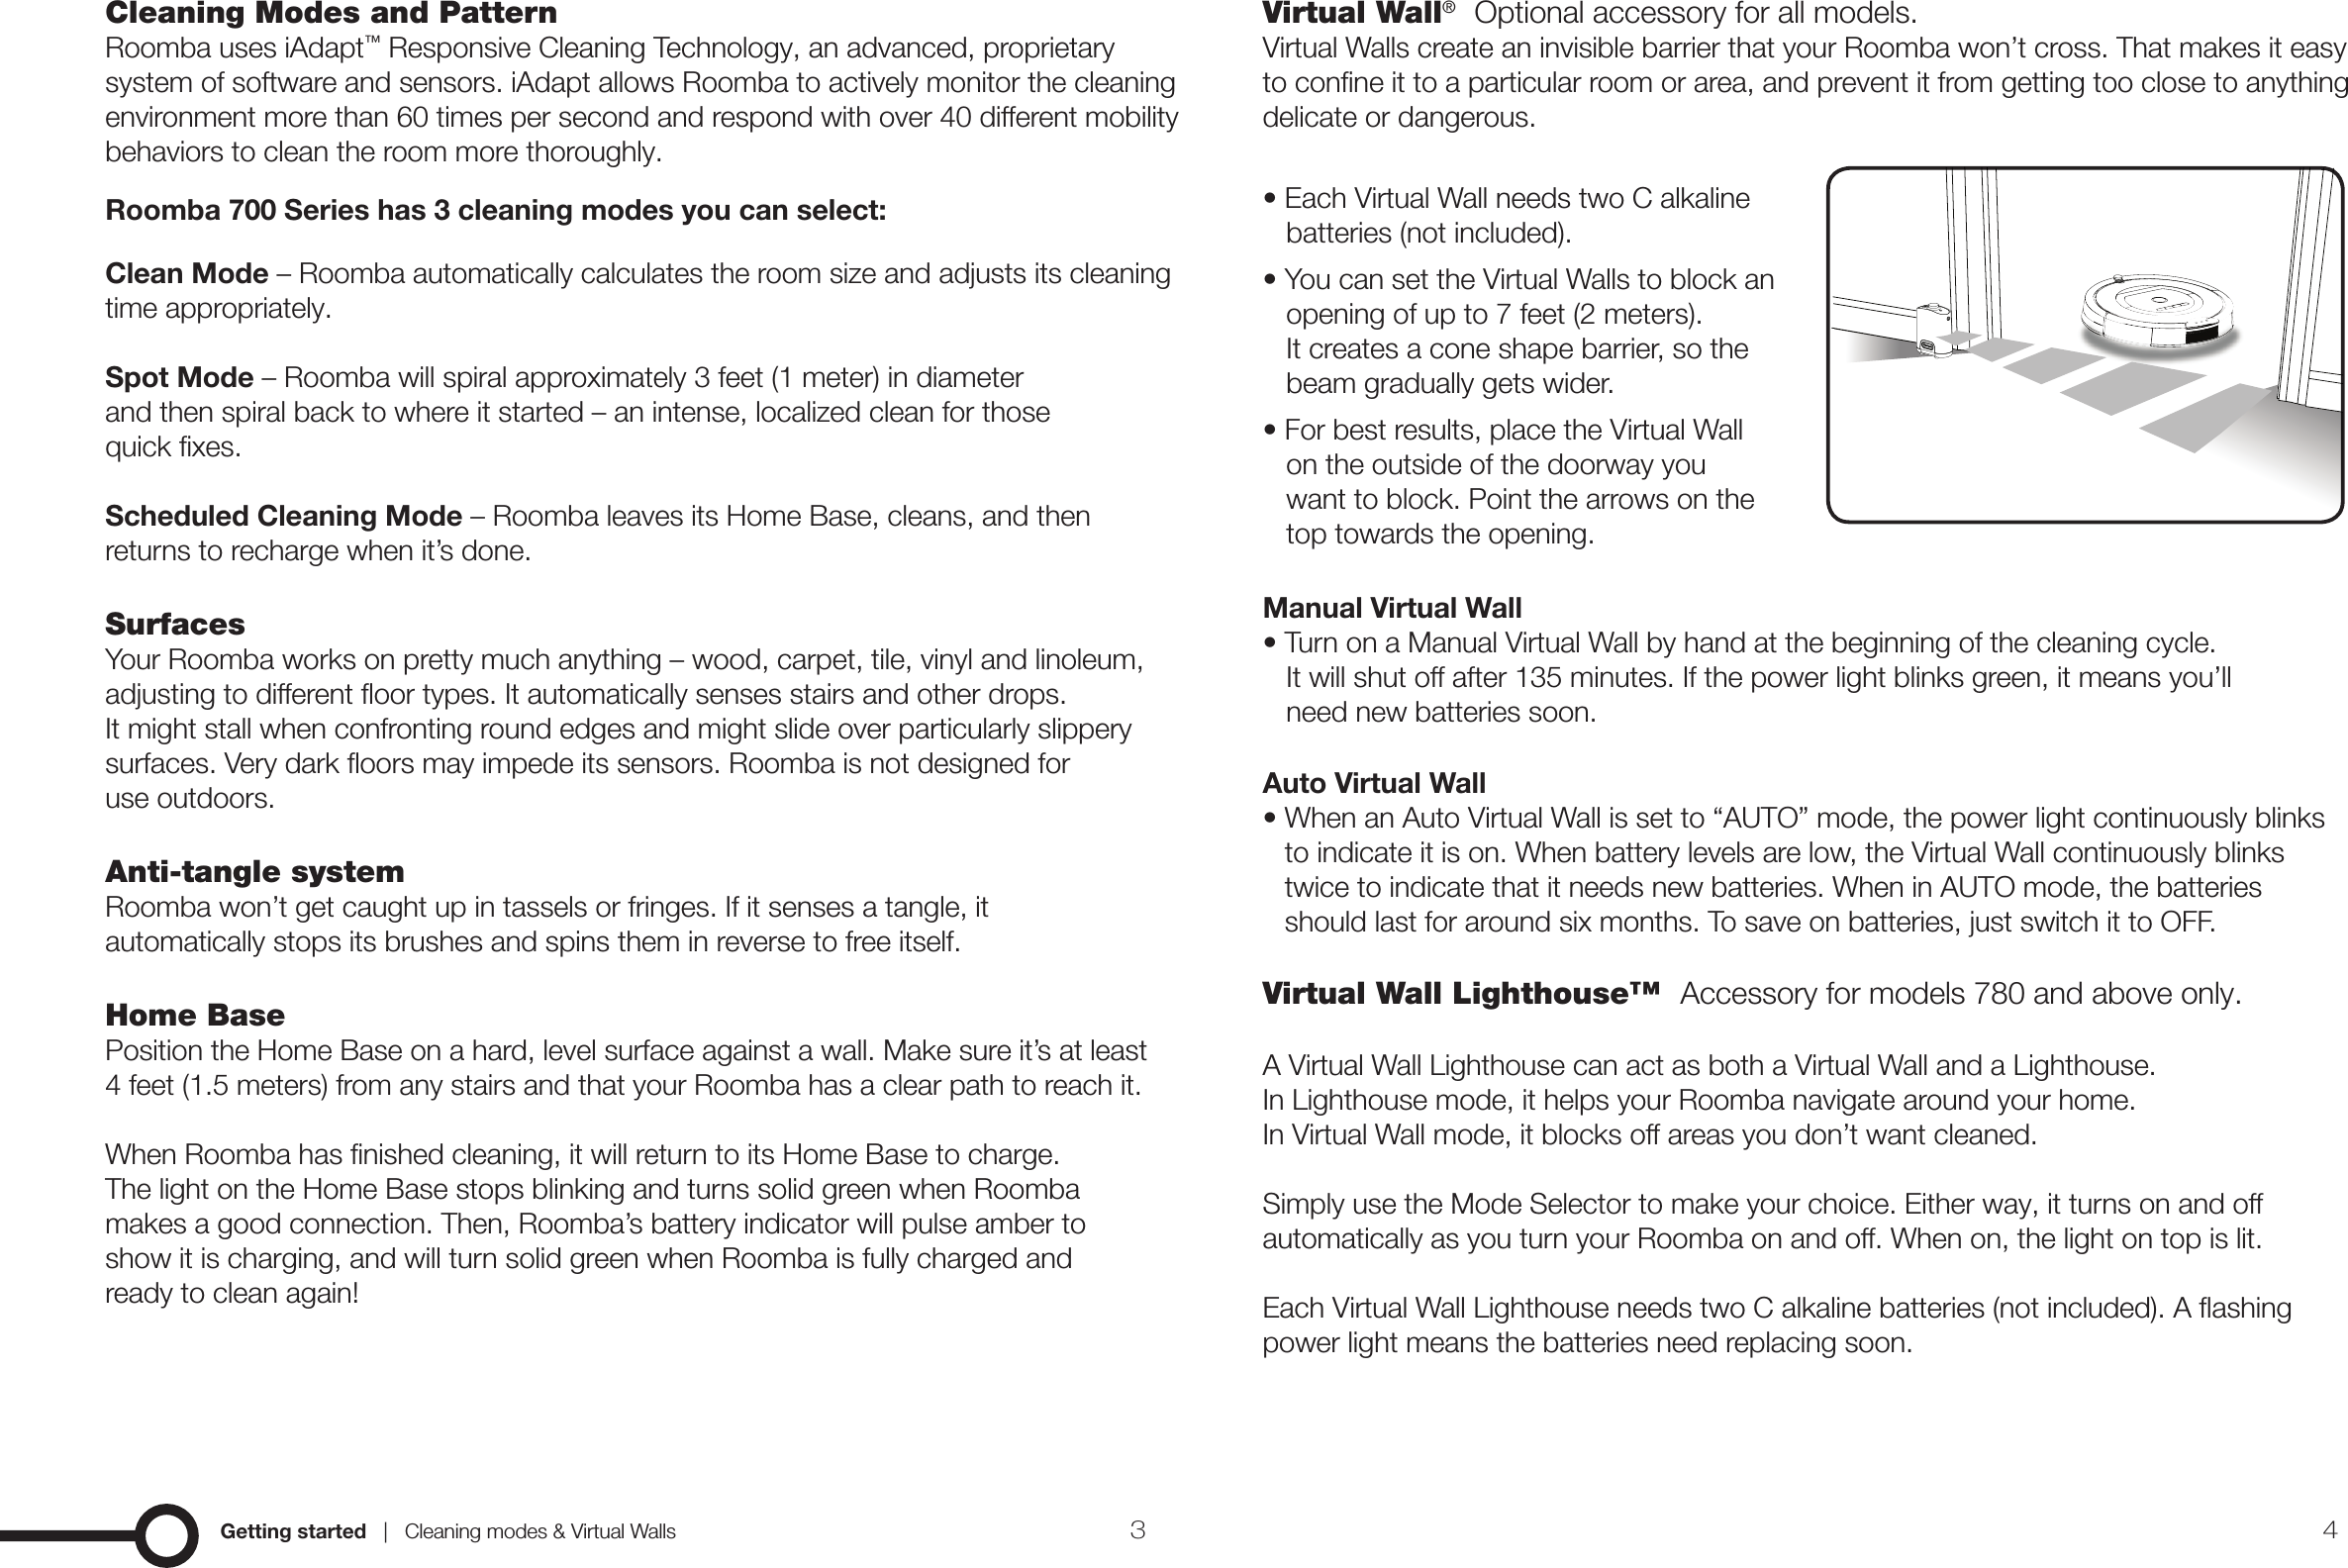 Page 3 of 9 - IRobot  Owner’s Guide En-US